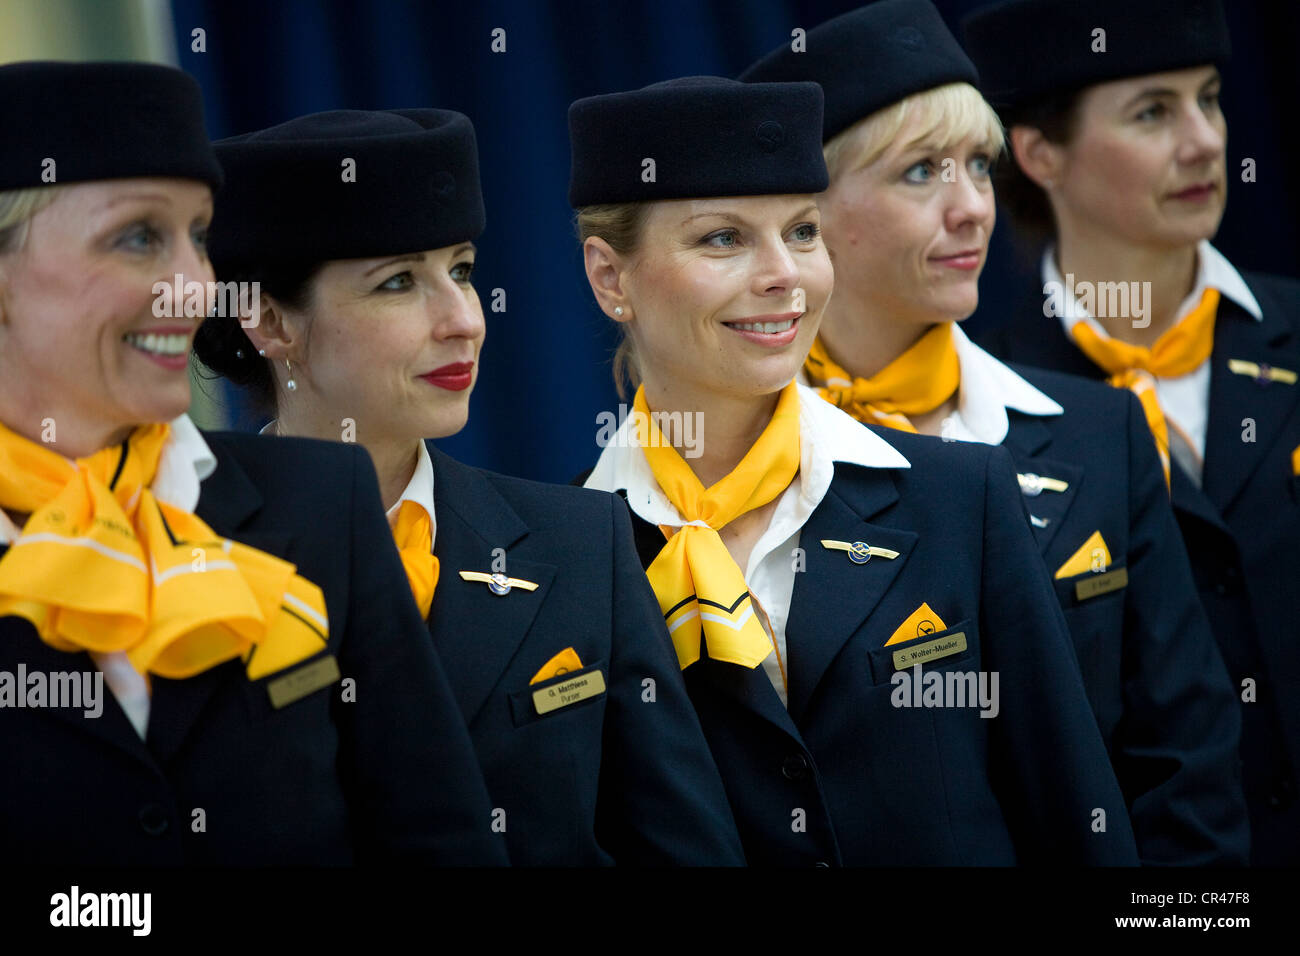 Lufthansa Airlines Flight Attendants.  Stock Photo